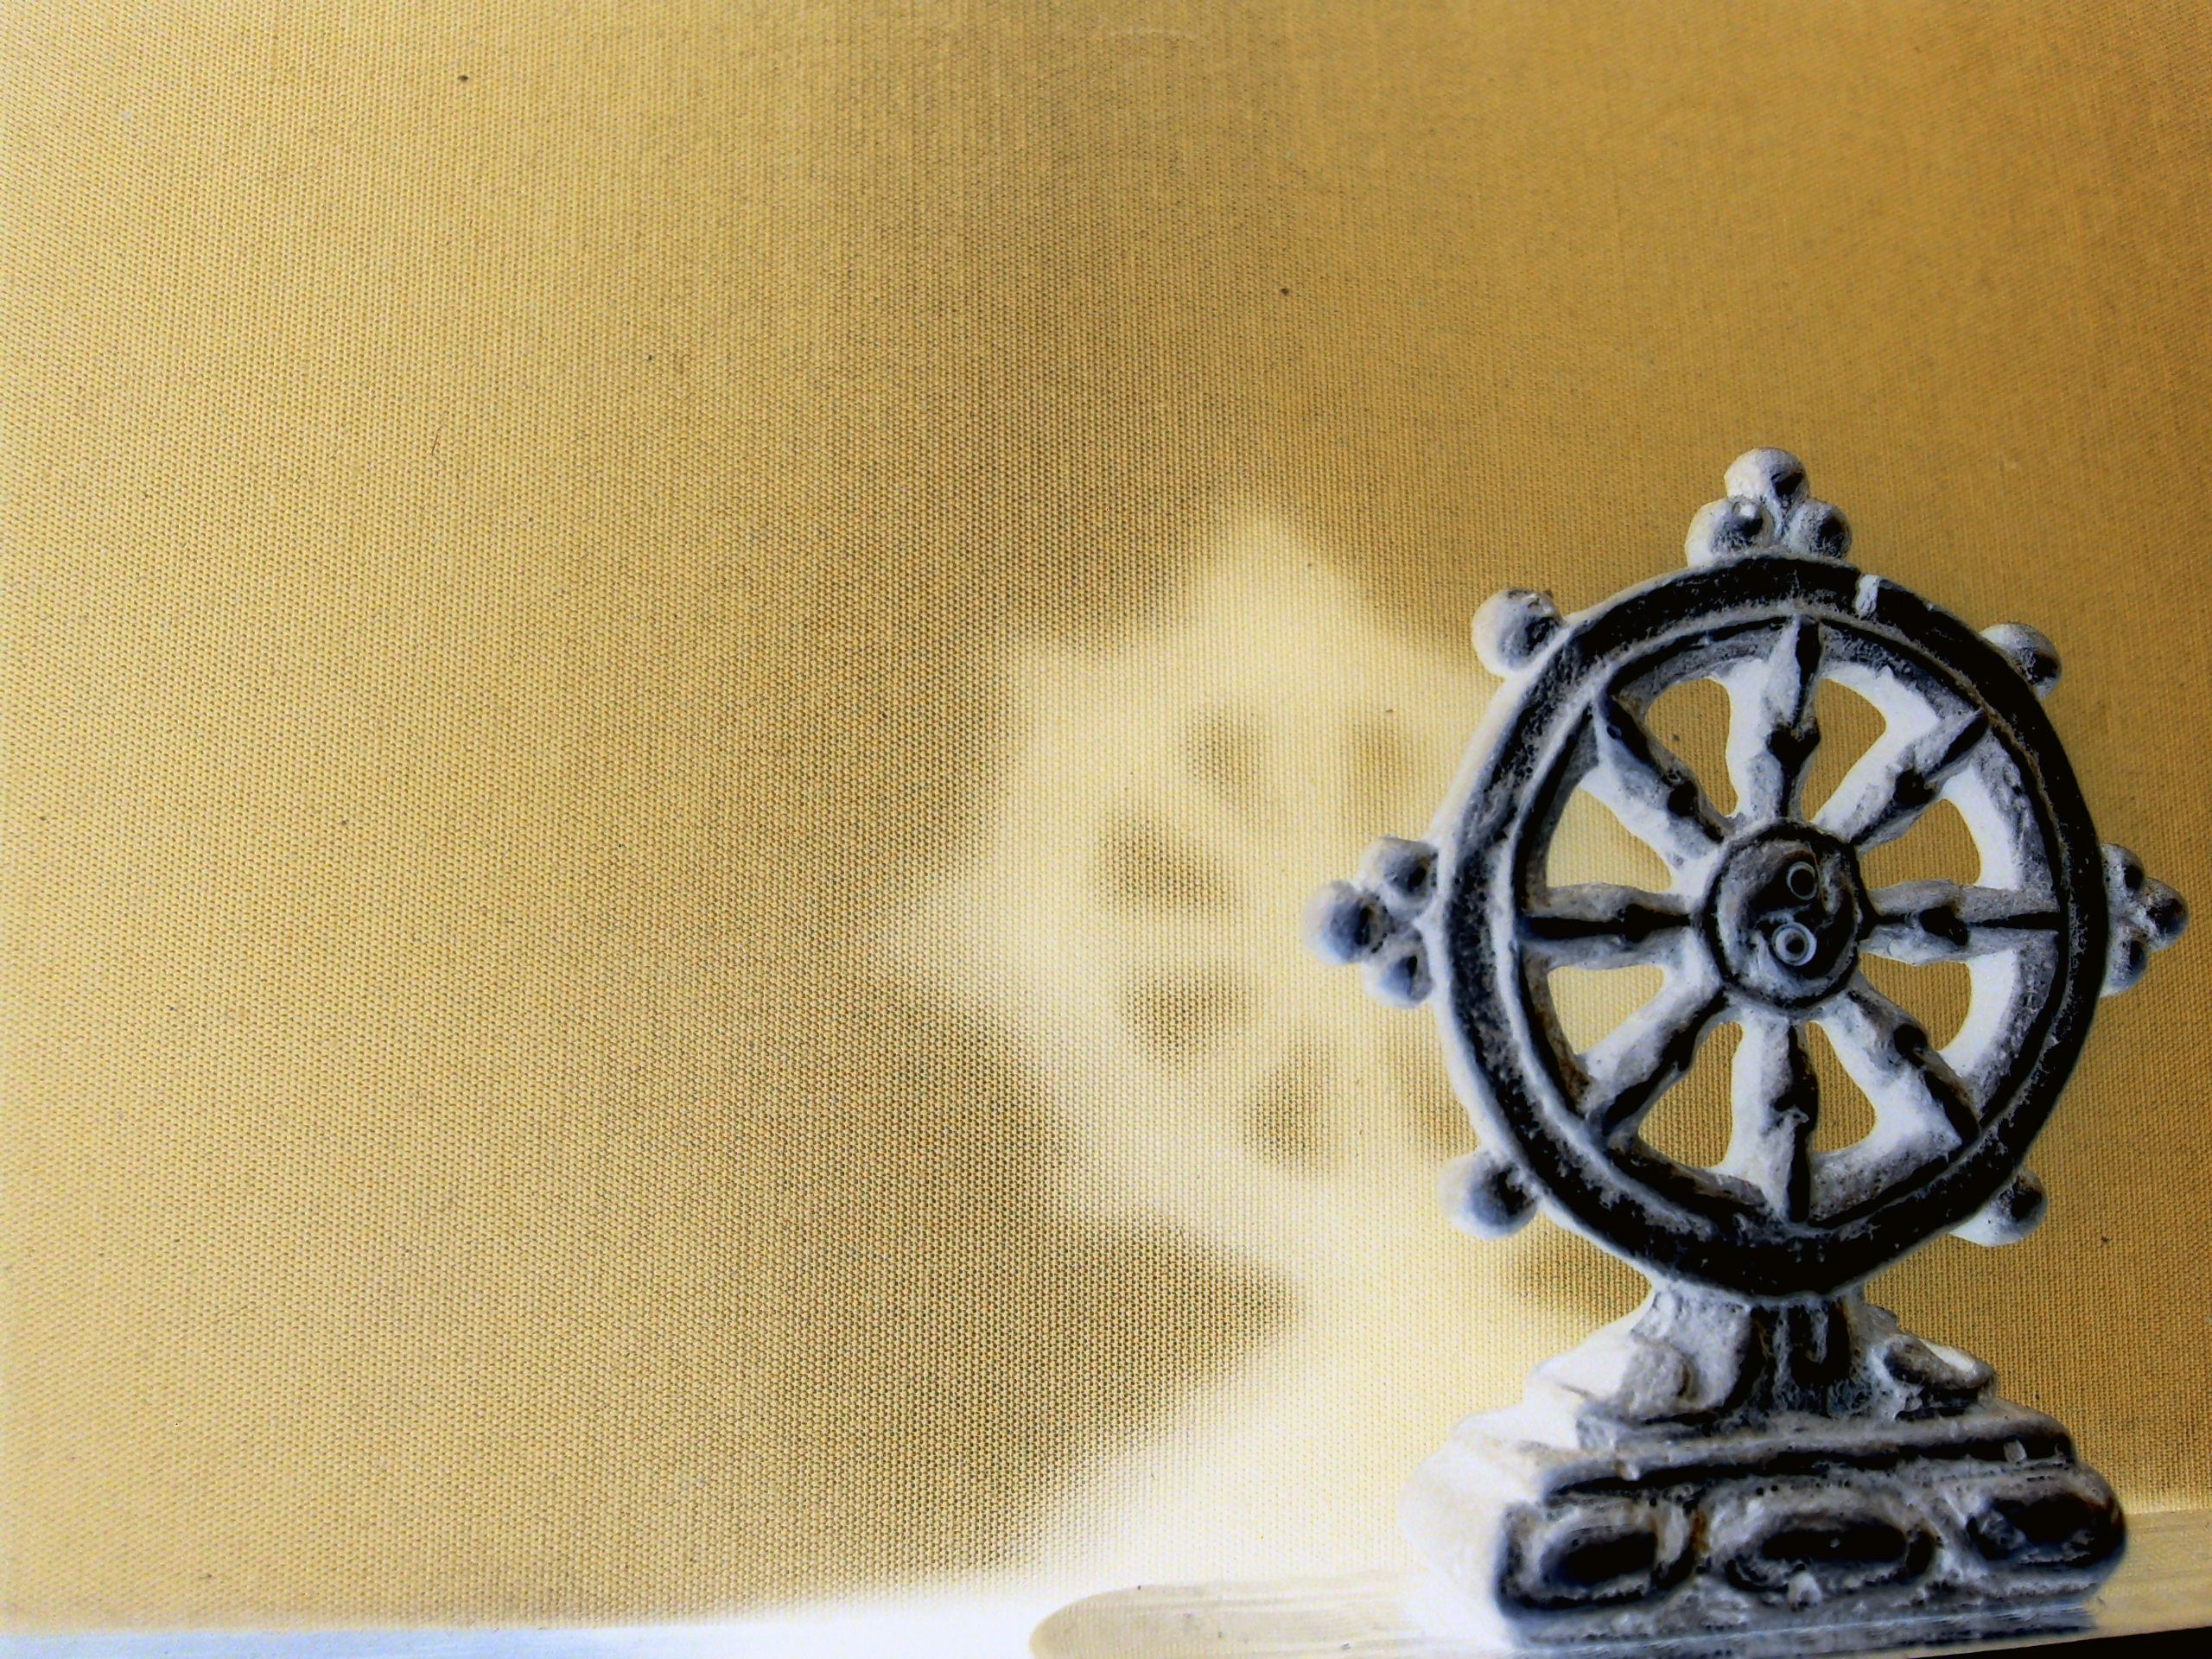 Buddhist Wheel Wallpaper - Free Stock Photos | LibreShot.com